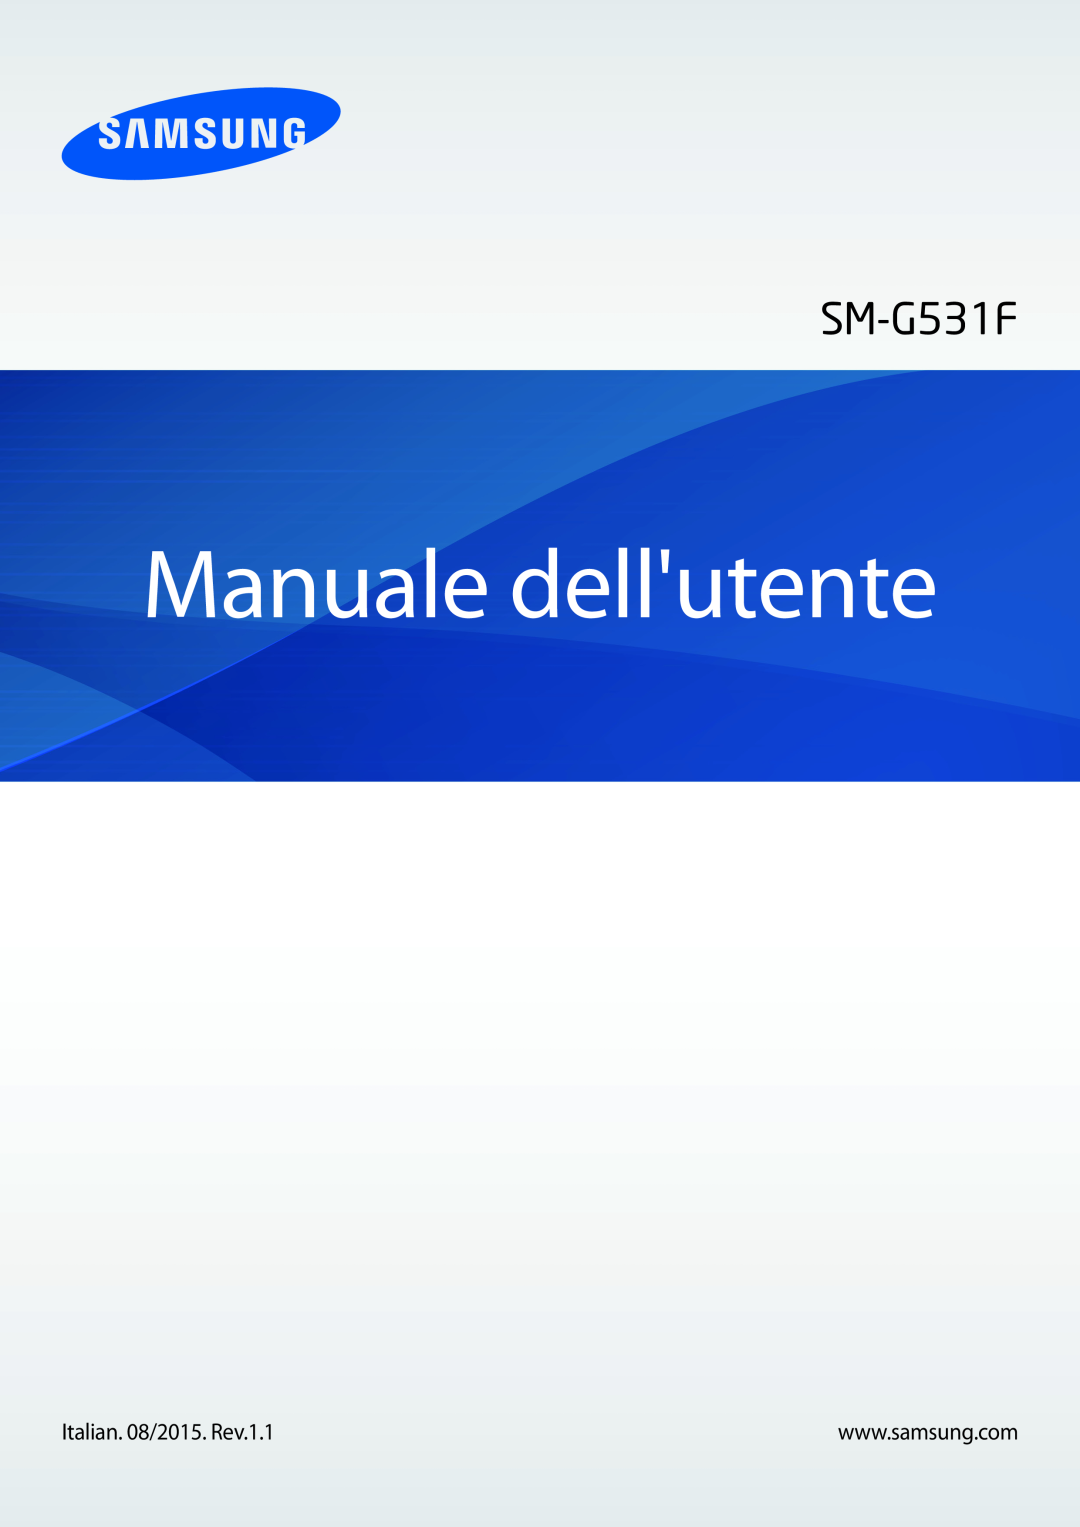 Samsung SM-G531FZAATUR, SM-G531FZAAPLS, SM-G531FZAADPL, SM-G531FZWAIDE, SM-G531FZAAIDE manual Manuale dellutente 